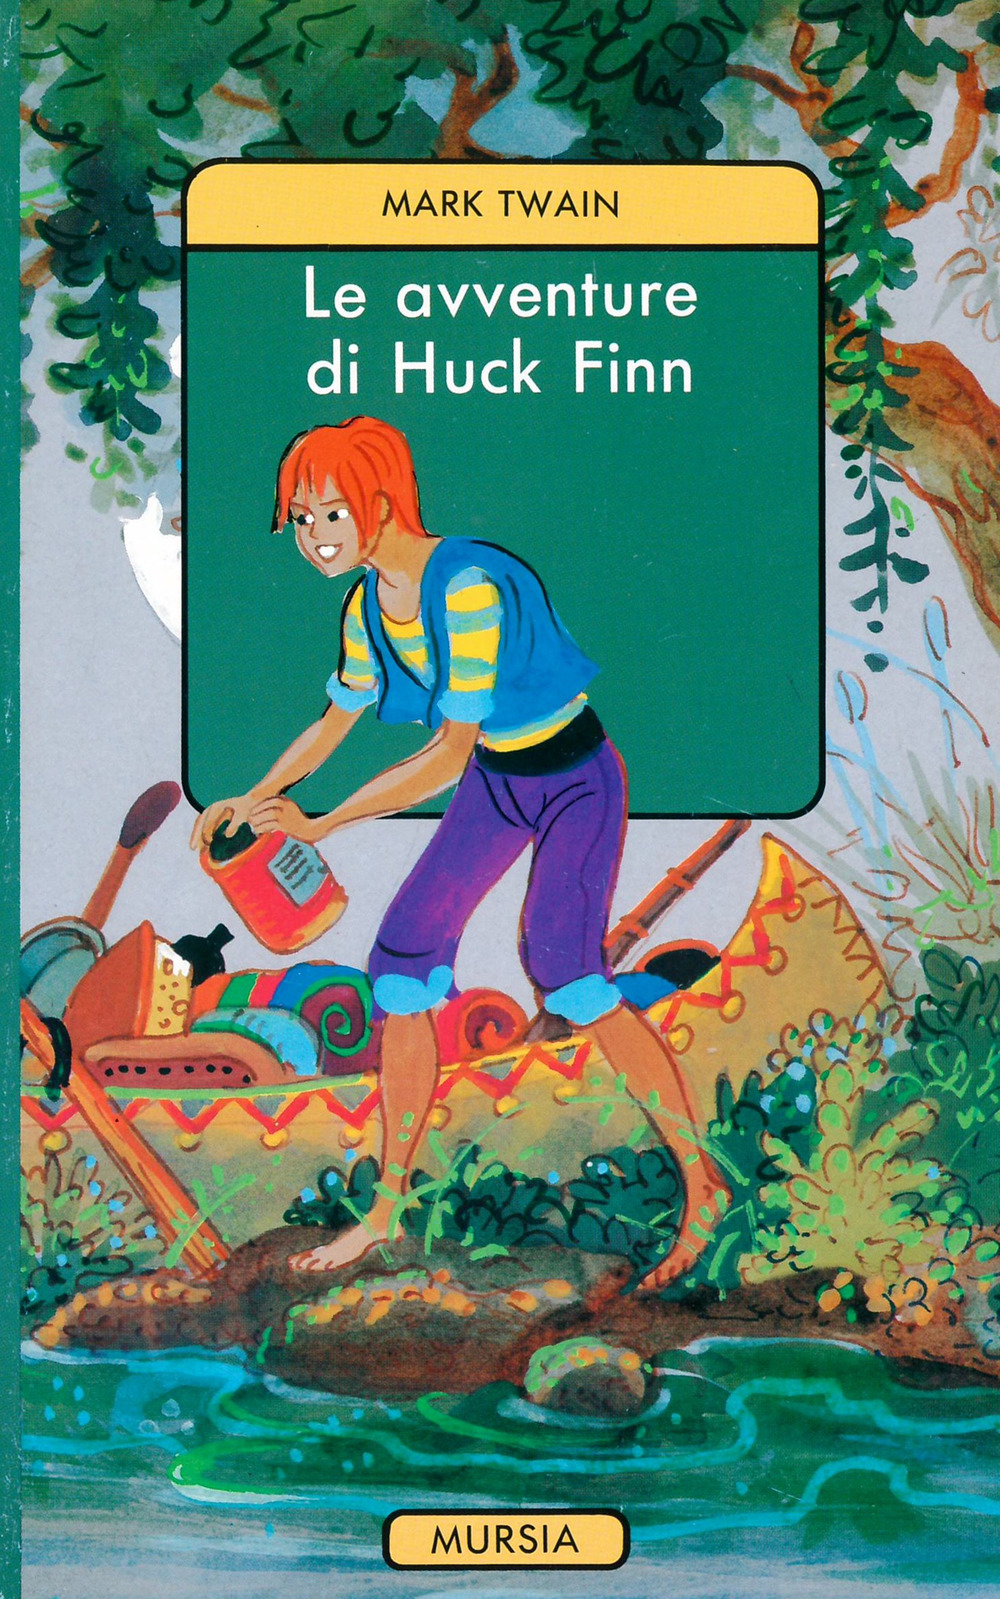 Le avventure di Huck Finn